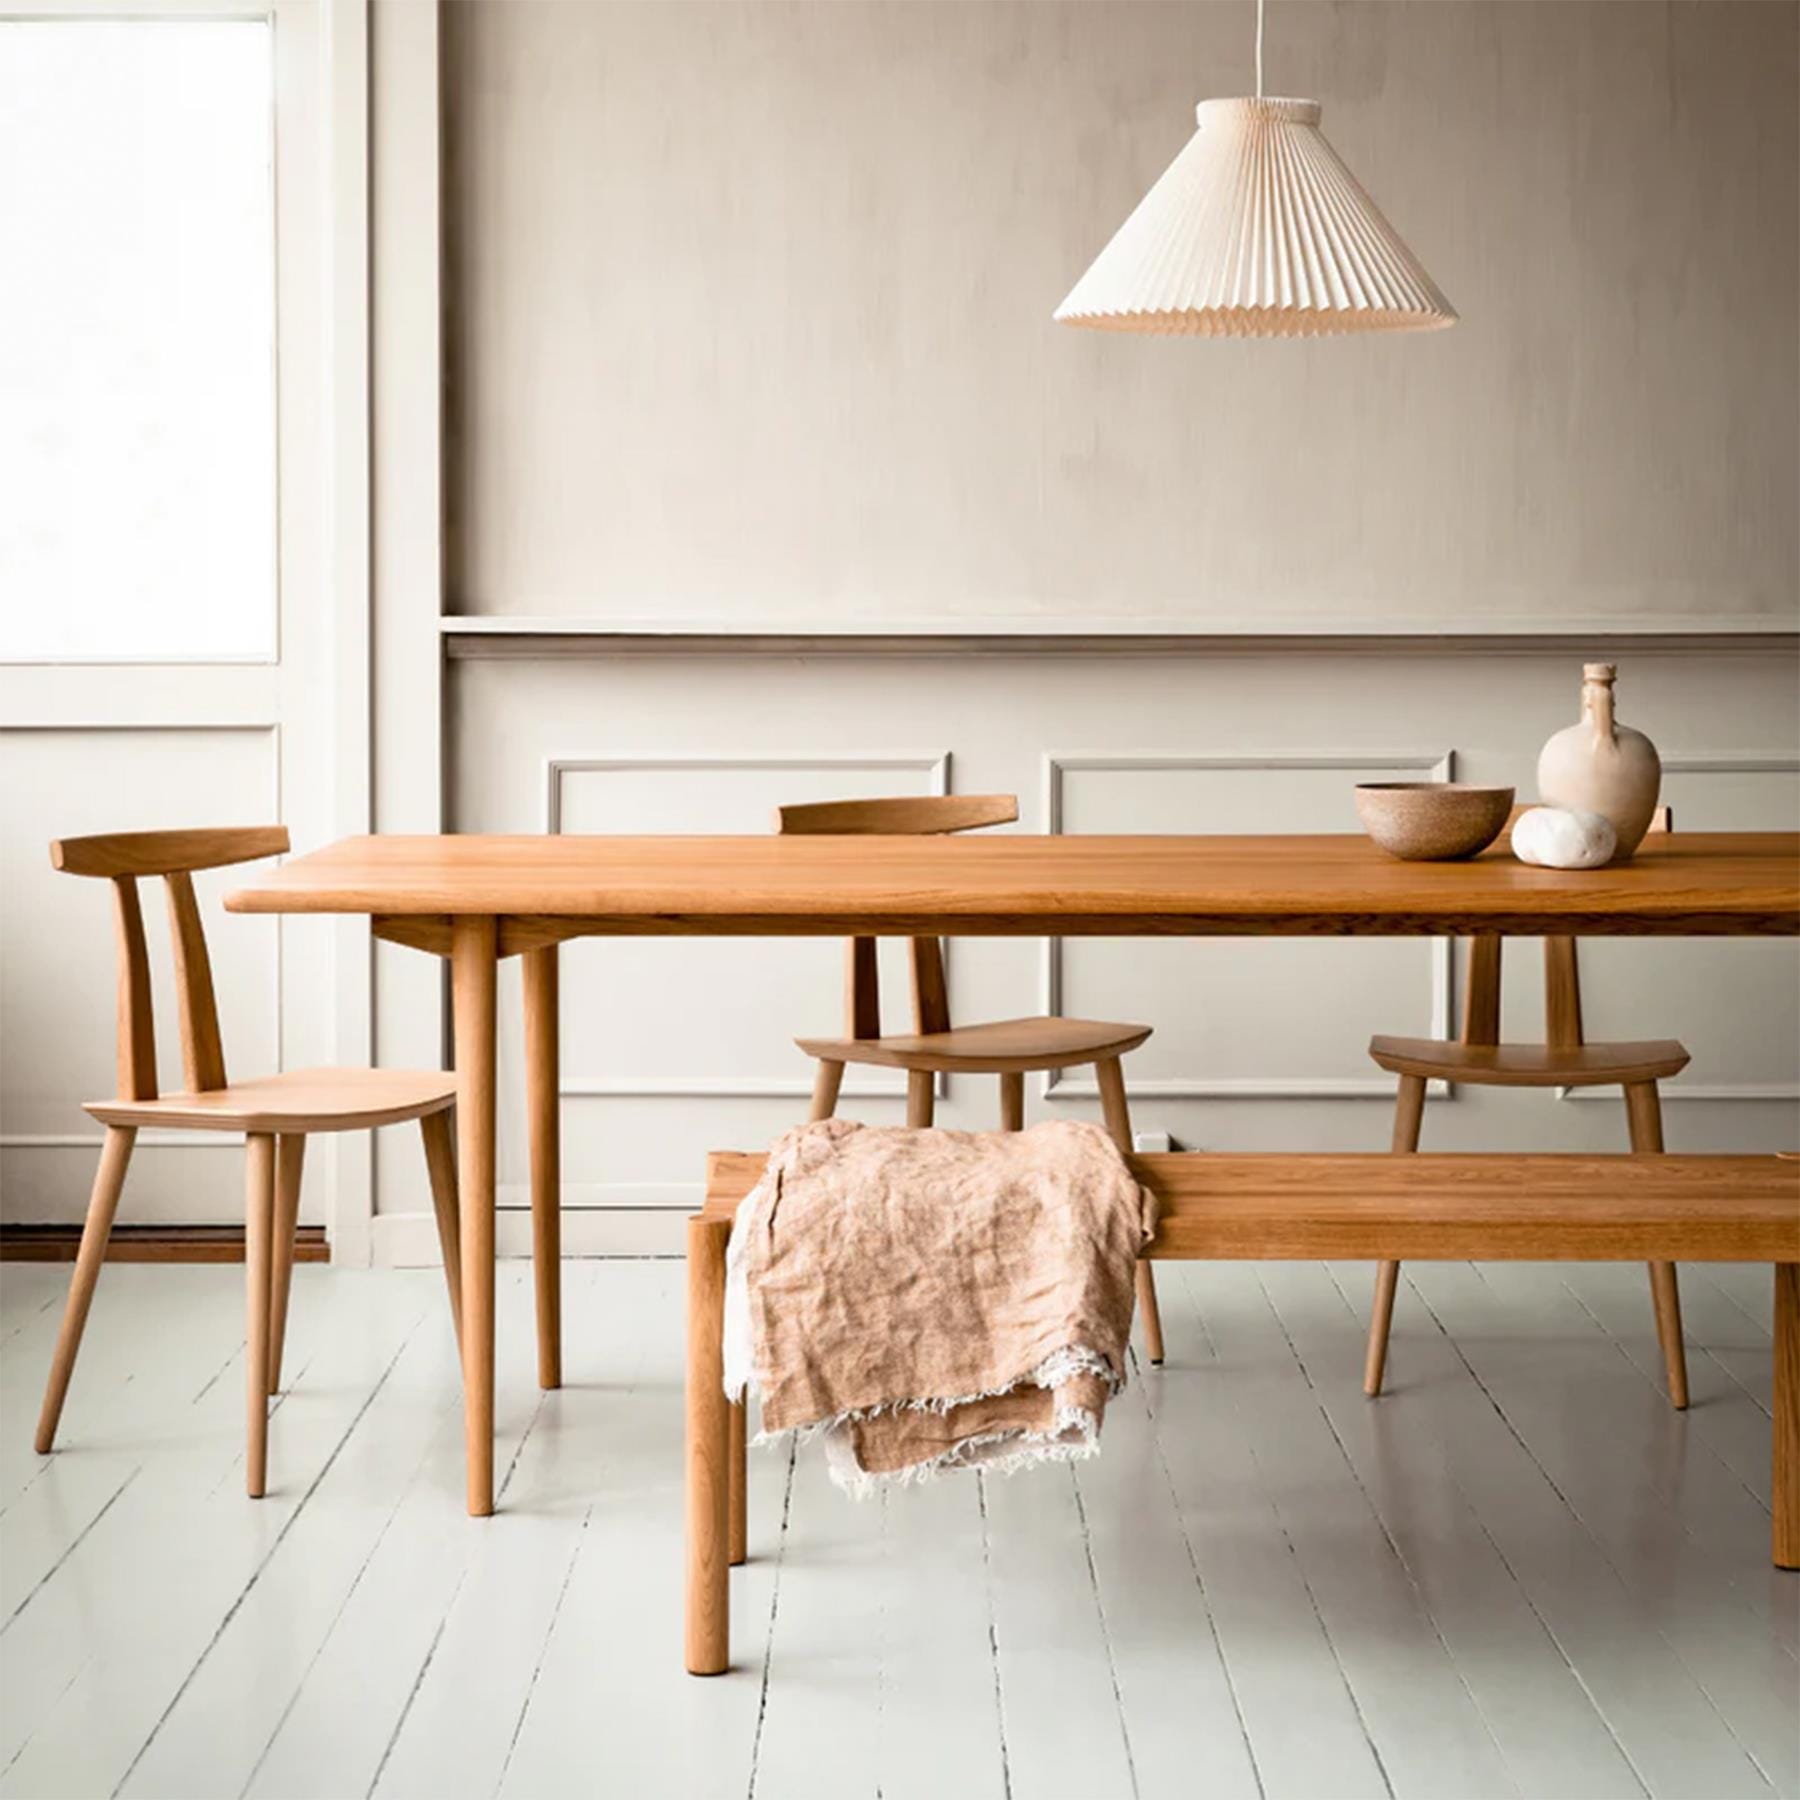 Make Nordic Holmen Rectangular Dining Table Large Natural Oak Length 260cm Width 80cm Without Extra Leaves Light Wood Designer Furniture From